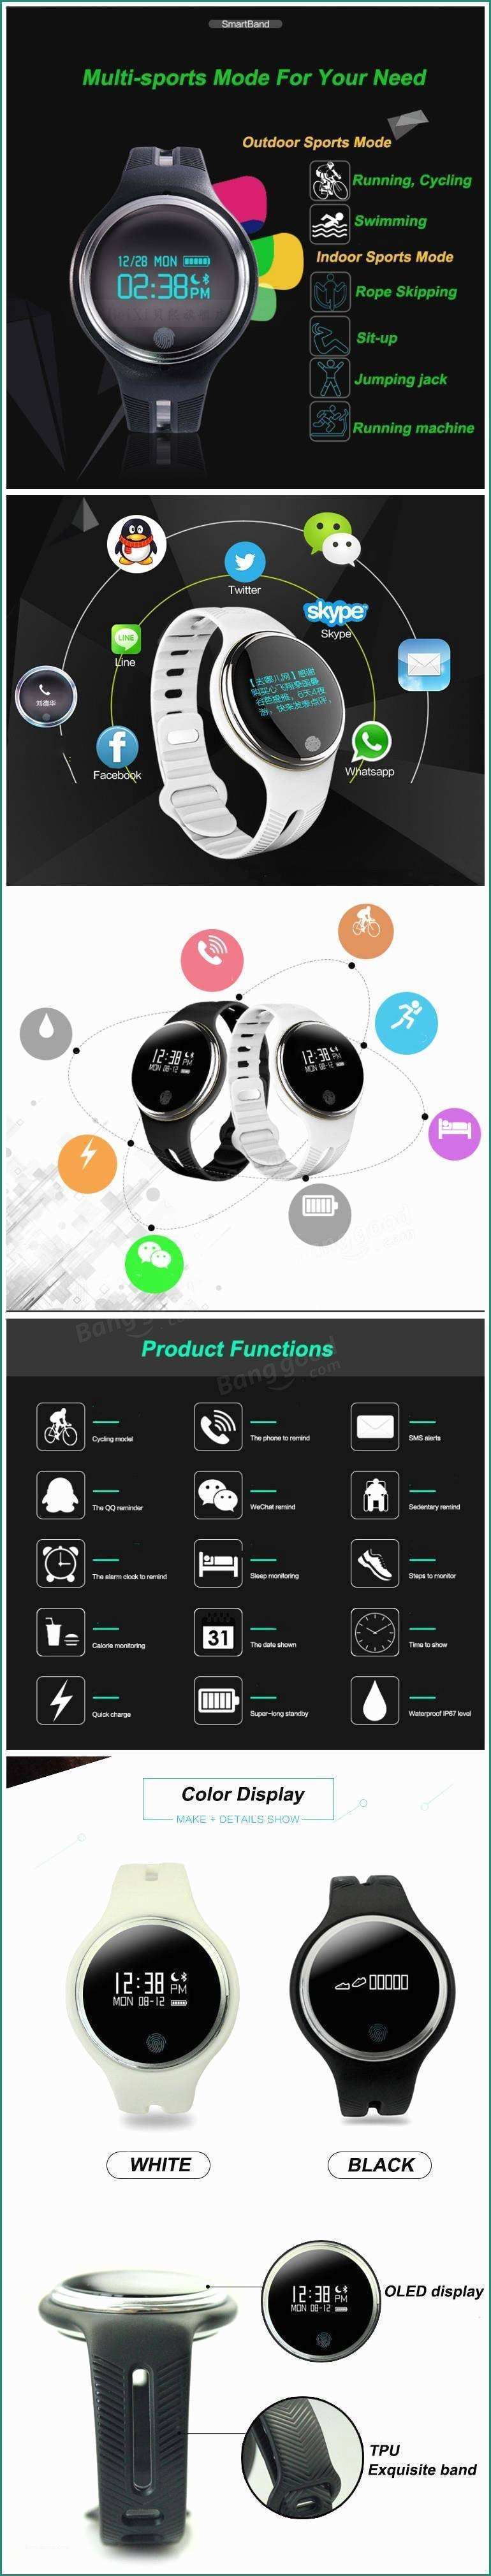 Recensione Umi Plus E Kaload E07 Bluetooth 4 0 Smart Salute orologio Ip67 Bracciale